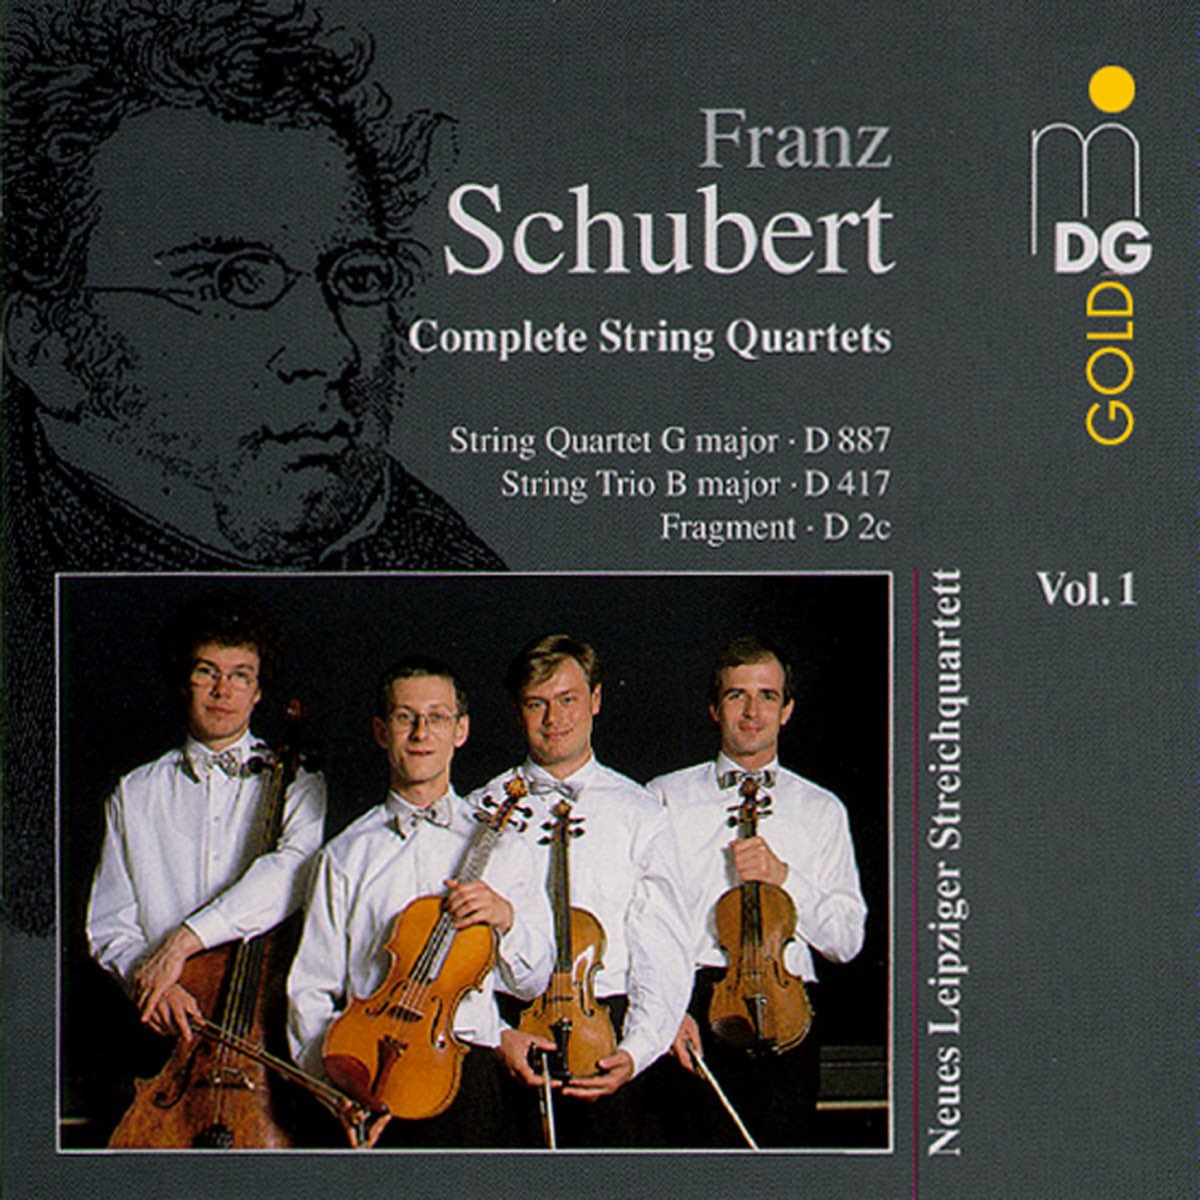 Franz Schubert: Complete String D. 887, D. 471, D2c, Vol. 1 by Leipziger Streichquartett on Apple Music